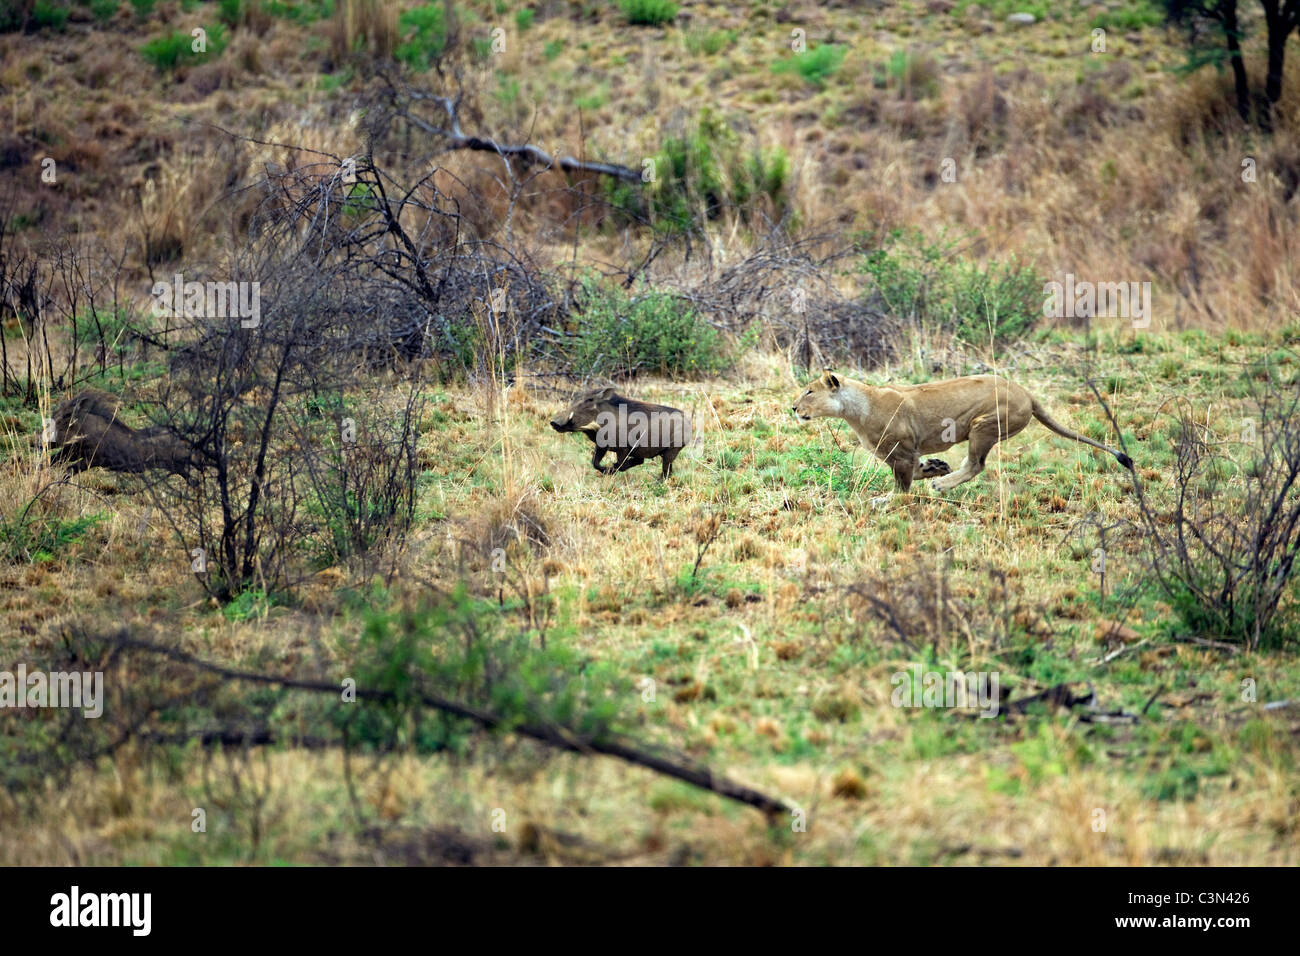 South Africa, near Rustenburg, Pilanesberg National Park. Lion, Panthera leo, hunting warthog. Stock Photo